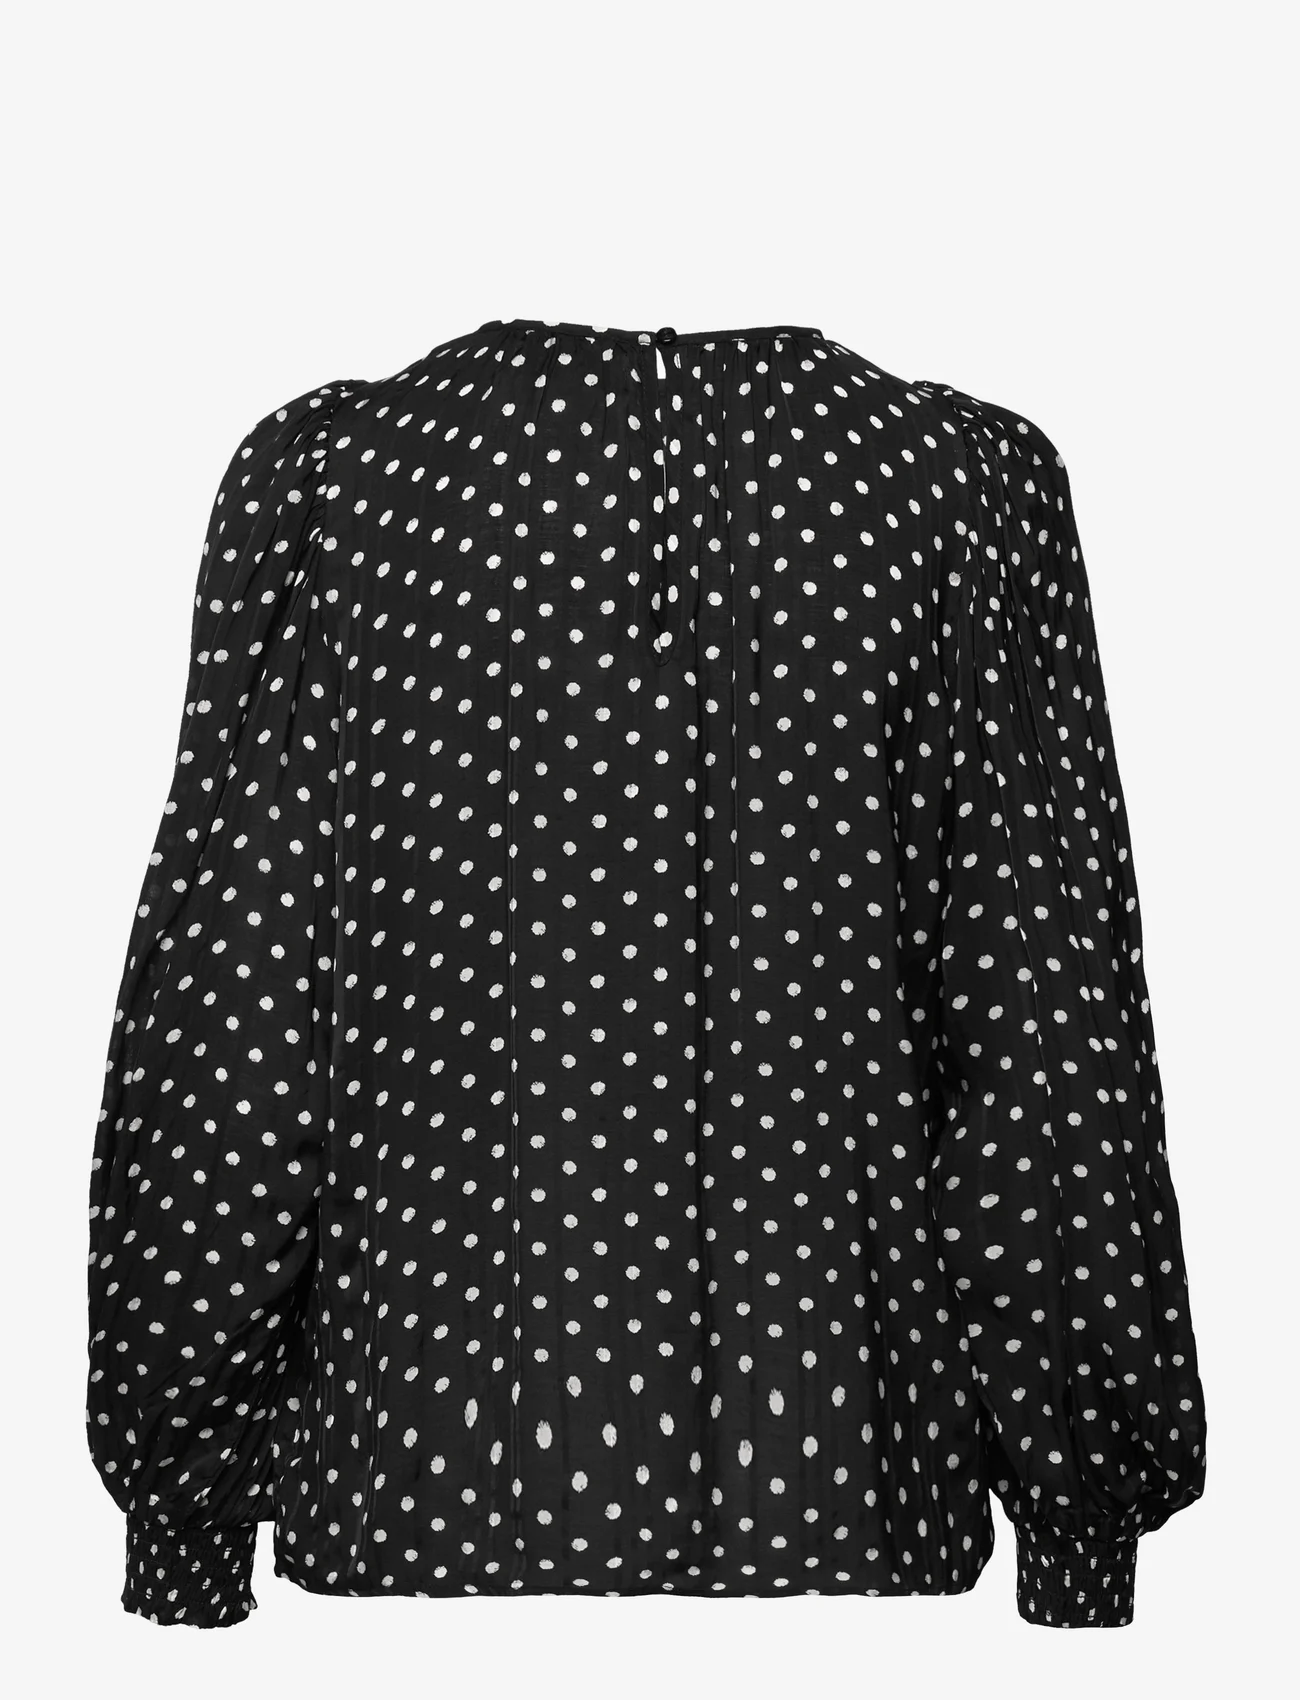 Lollys Laundry - Monica Blouse - bluzki z długimi rękawami - 76 dot print - 1